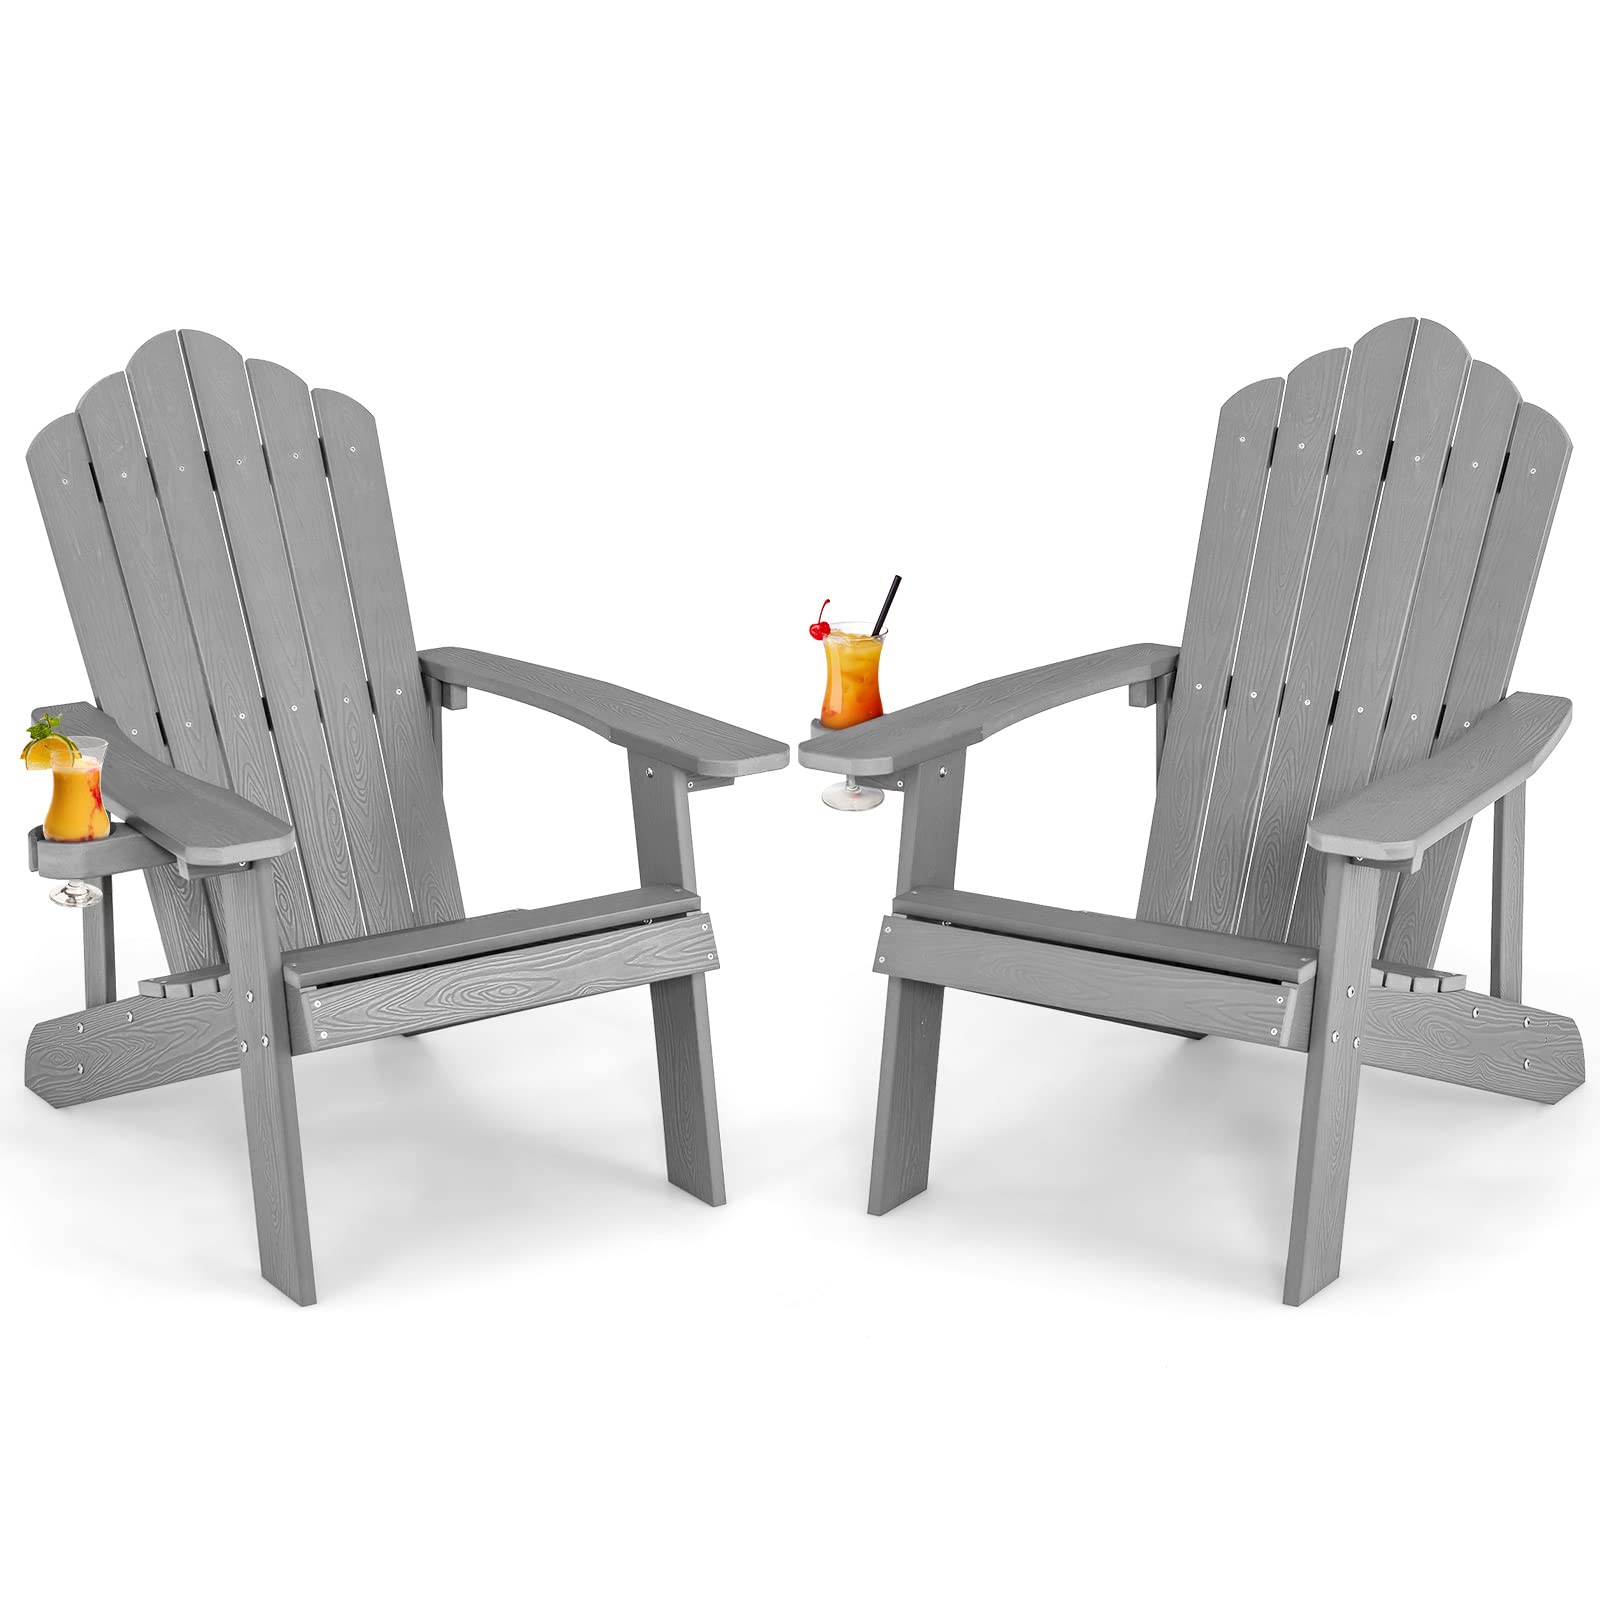 Giantex Outdoor Adirondack Chair, Grey